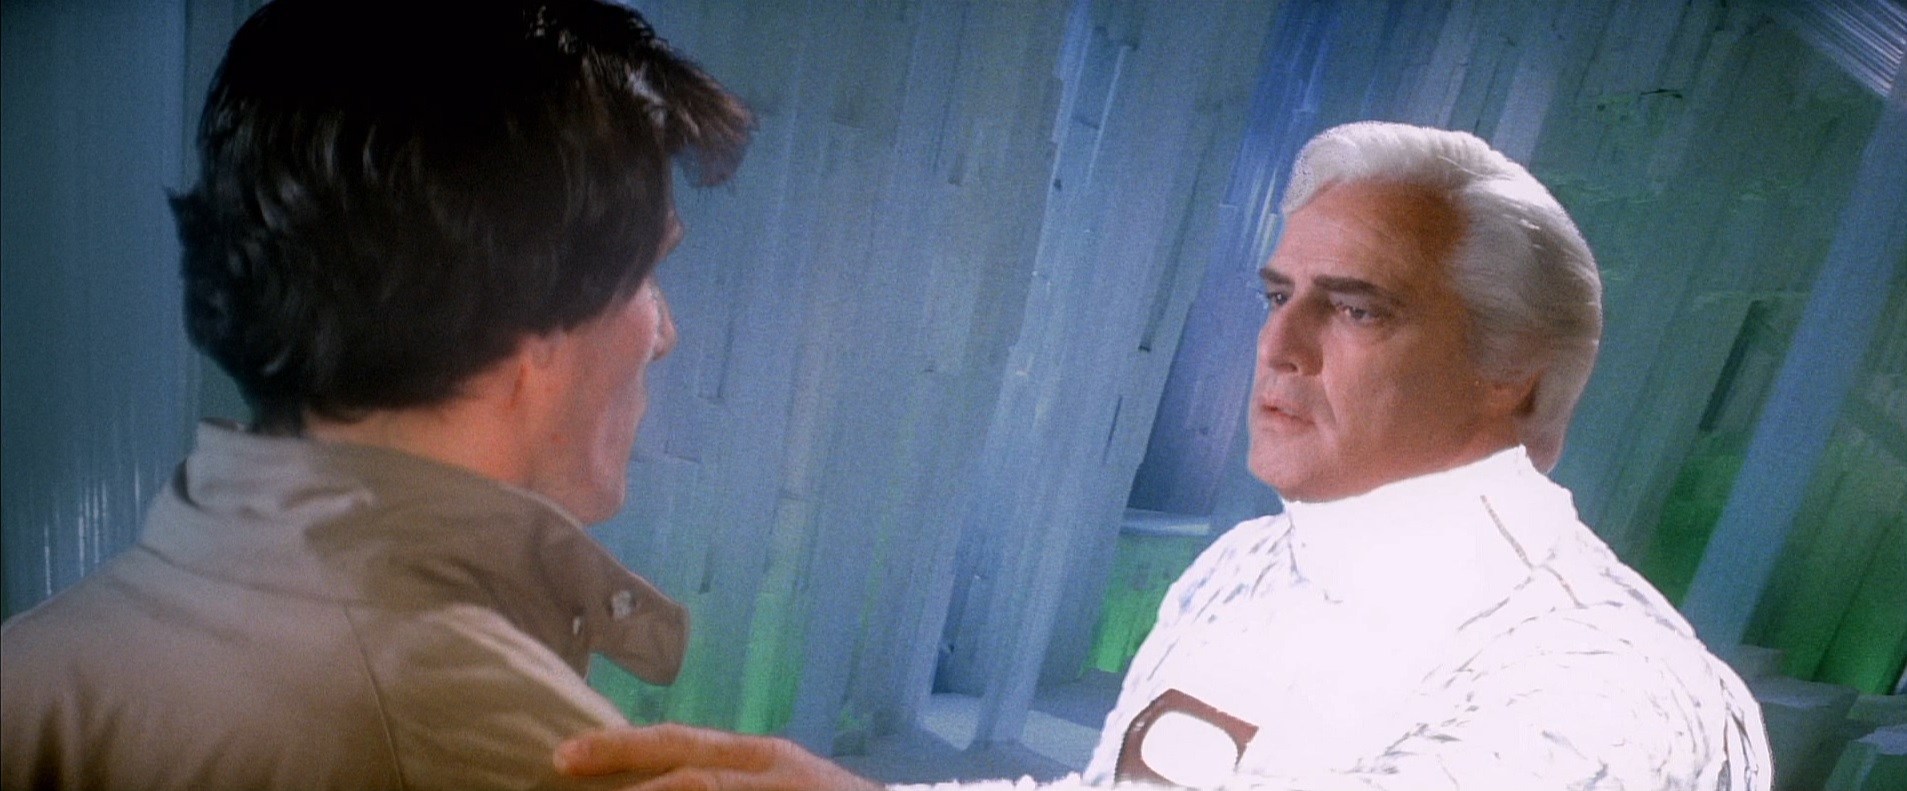 Marlon Brando as Jor-el in Superman II The Richard Donner Cut (2006)